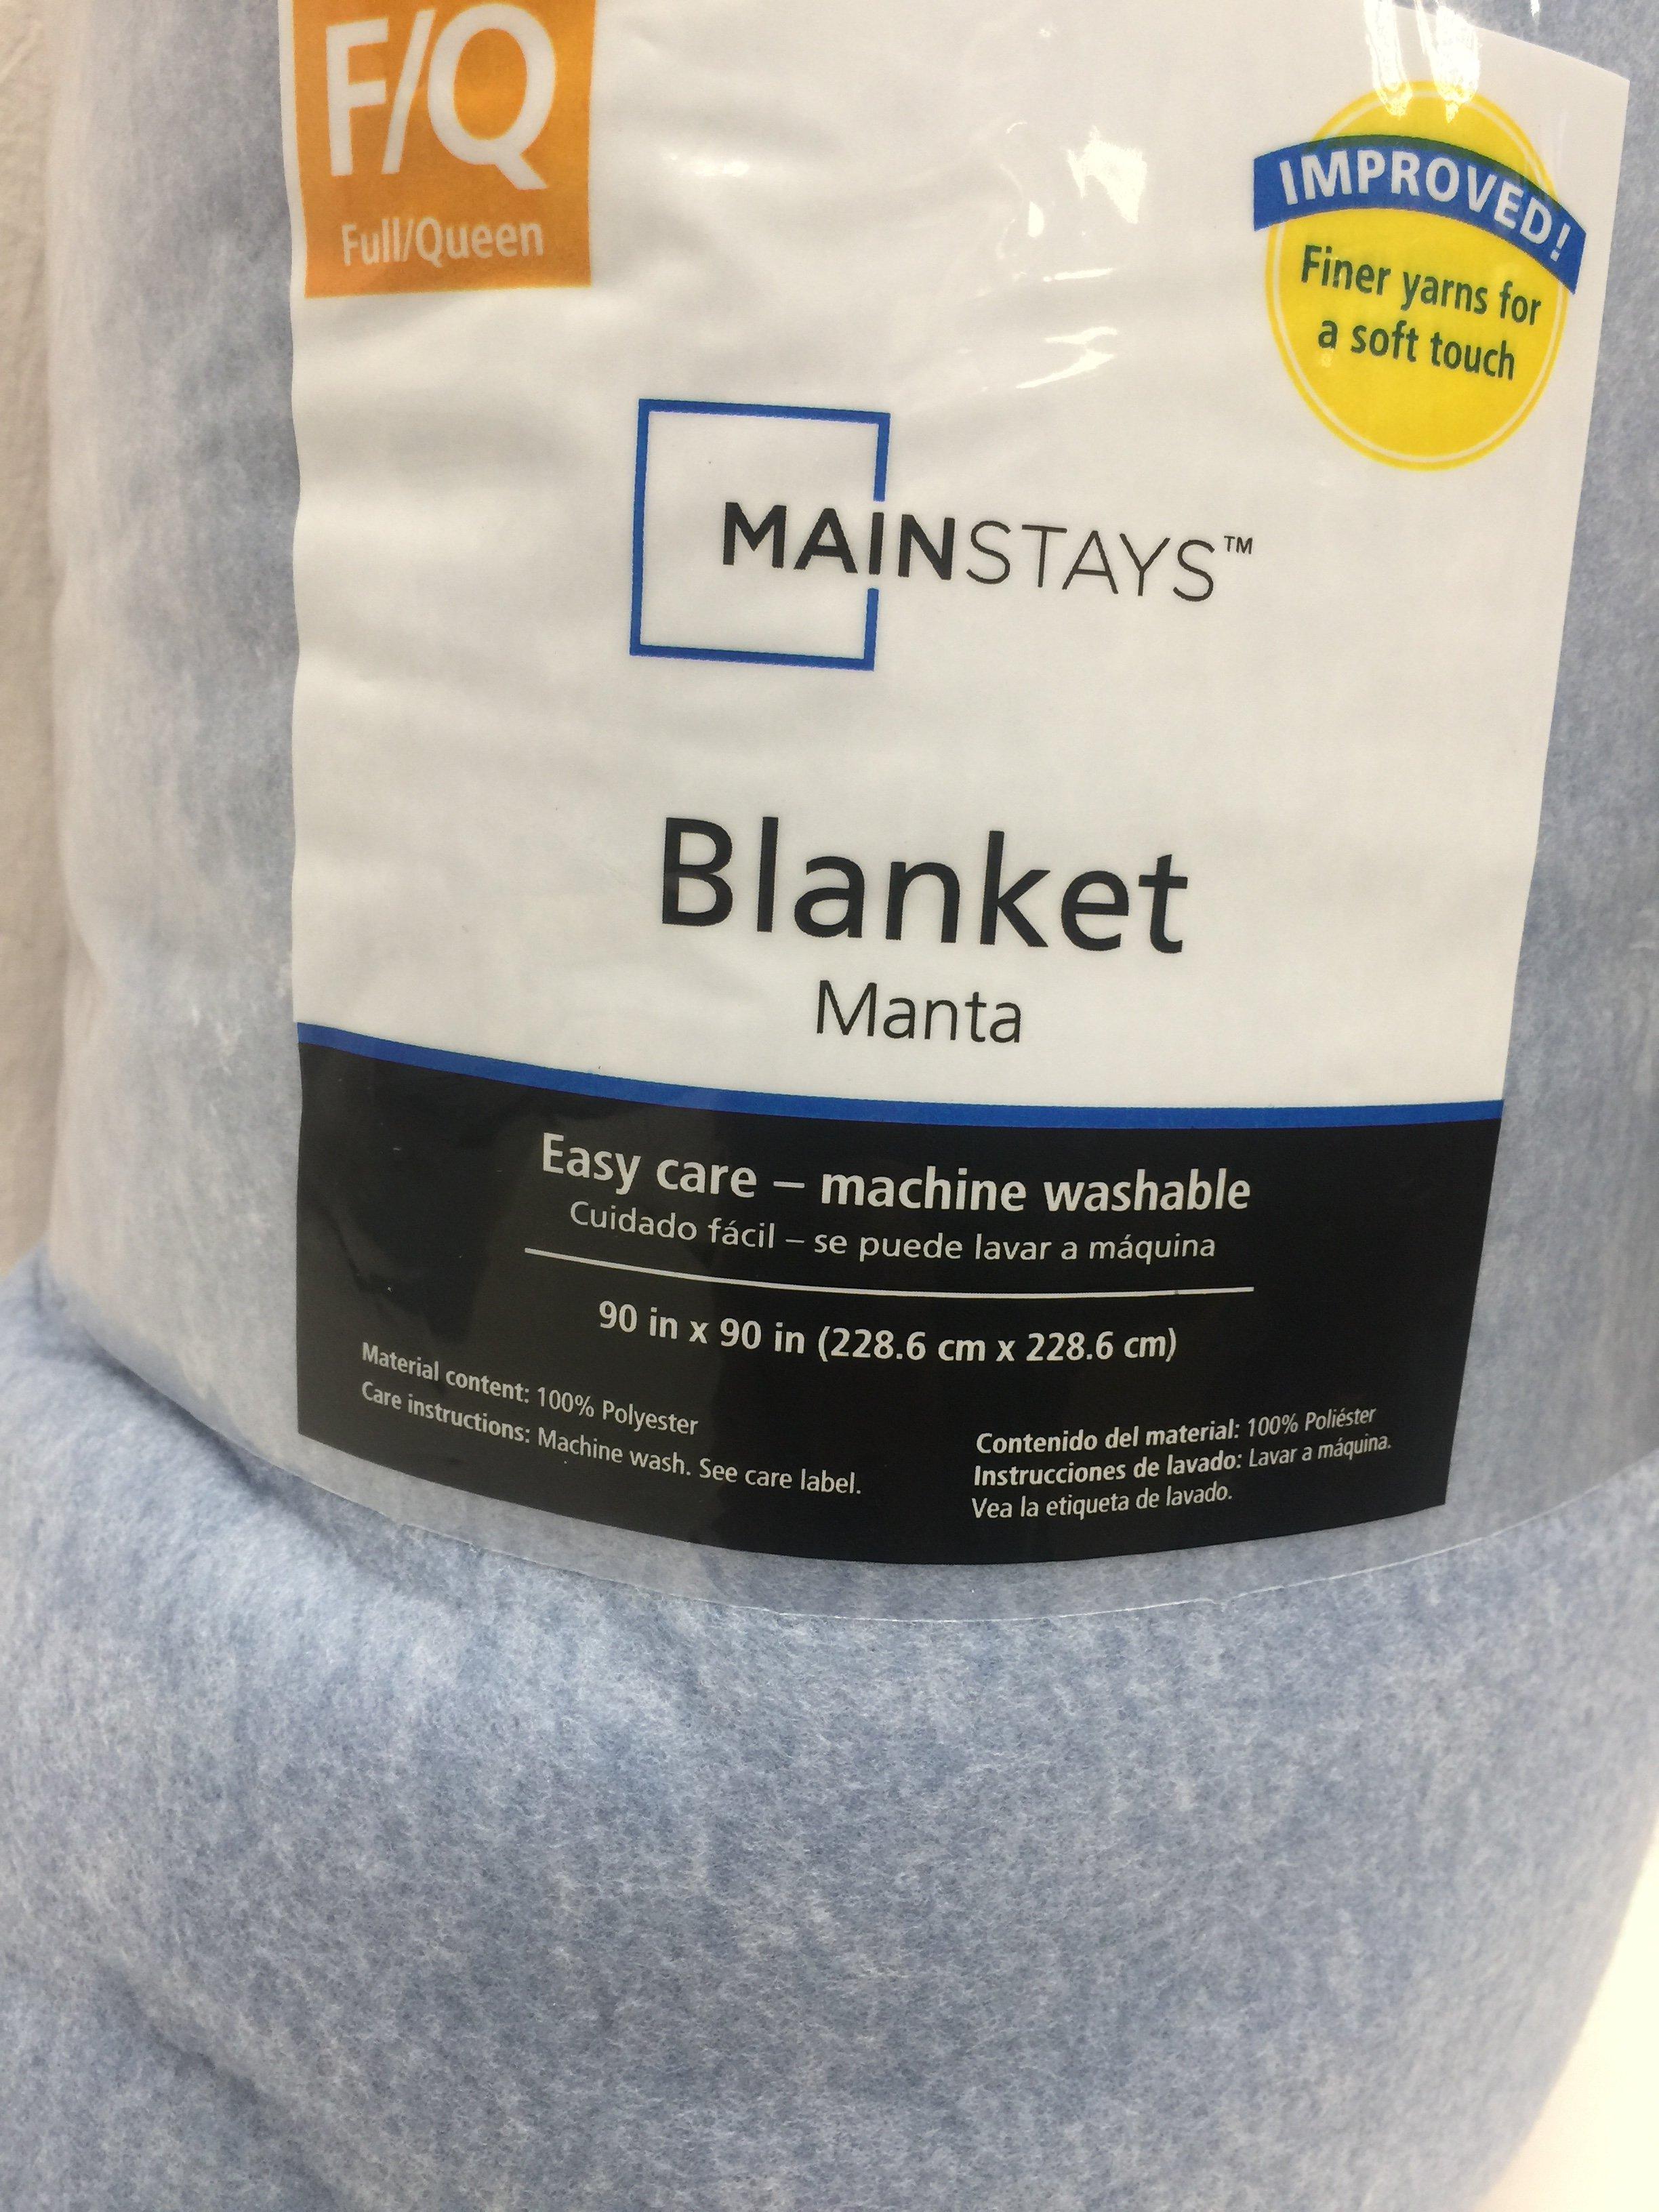 MainStays F/Q Blanket